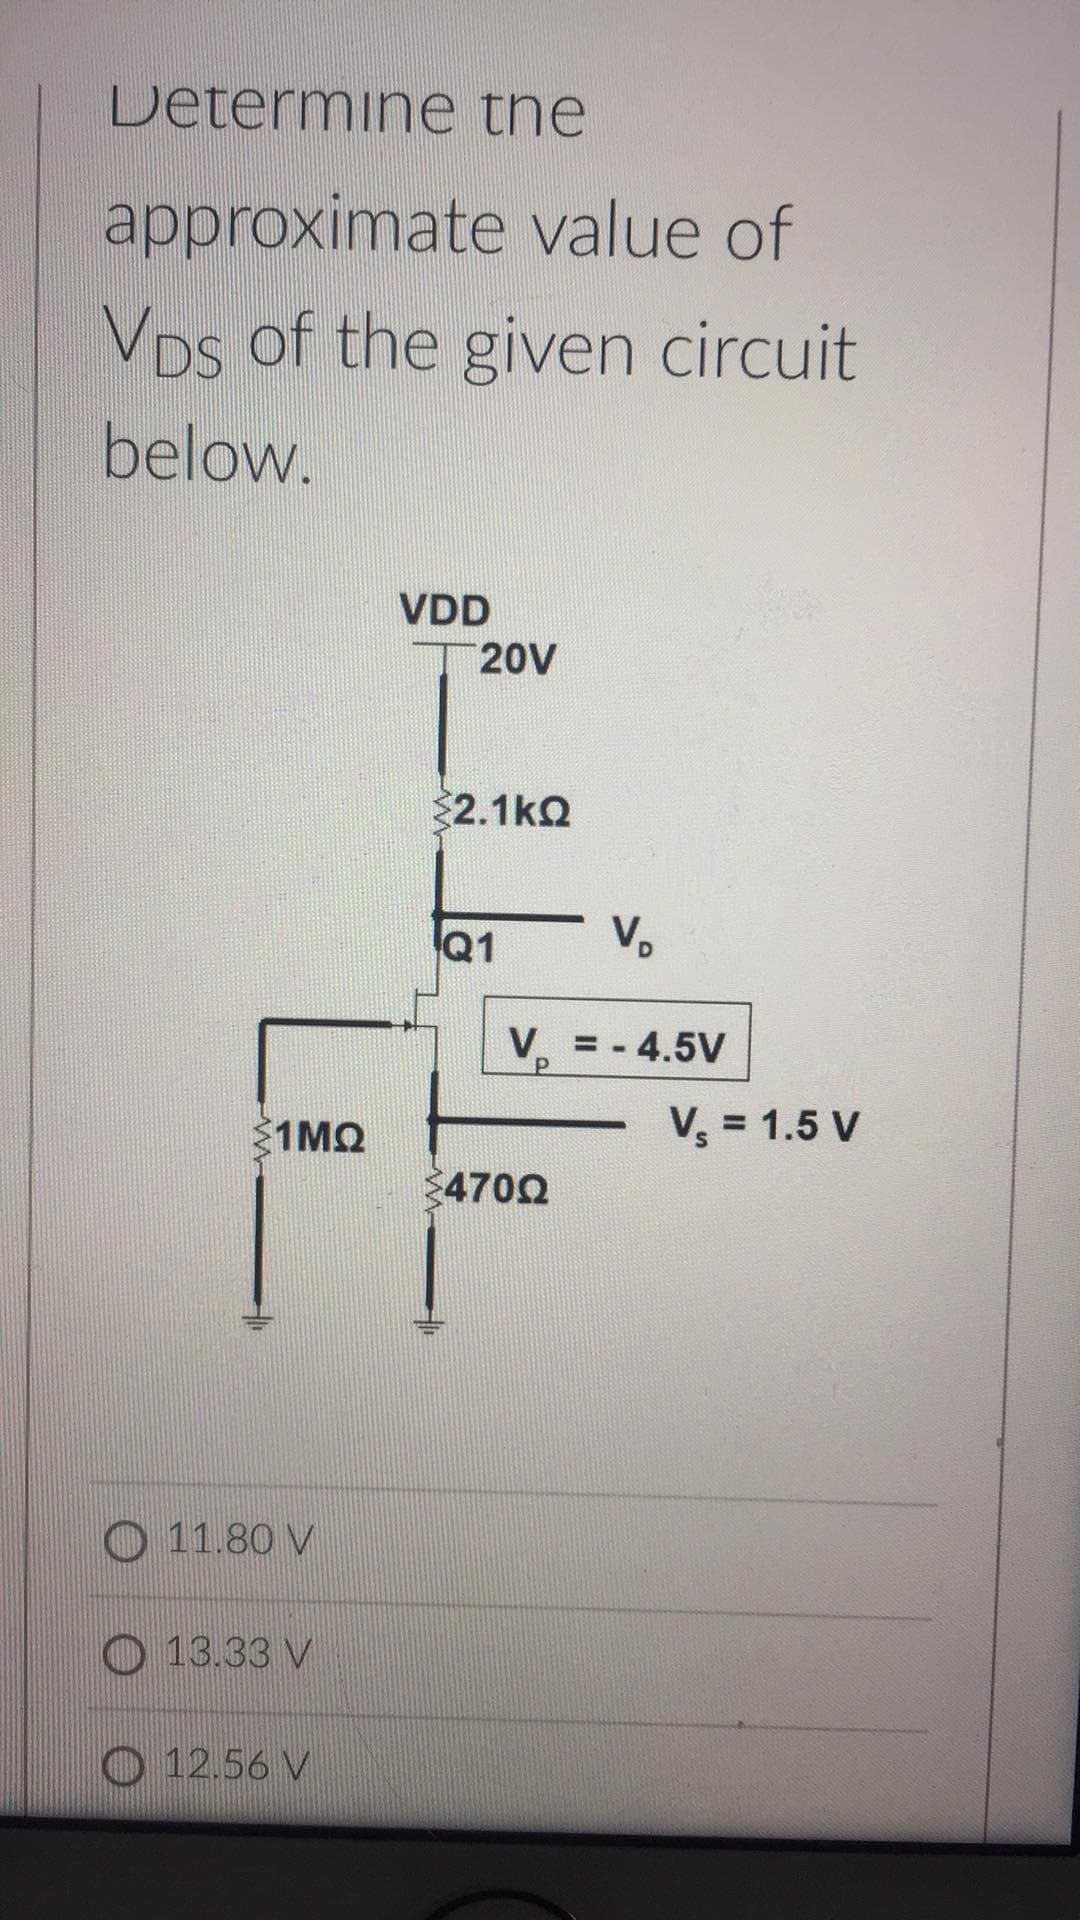 Determine the
approximate value of
VDs of the given circuit
below.
VDD
20V
2.1kQ
Q1
V.
V = - 4.5V
1MQ
V, = 1.5 V
4702
O 11.80 V
O 13.33 V
O 12.56 V
